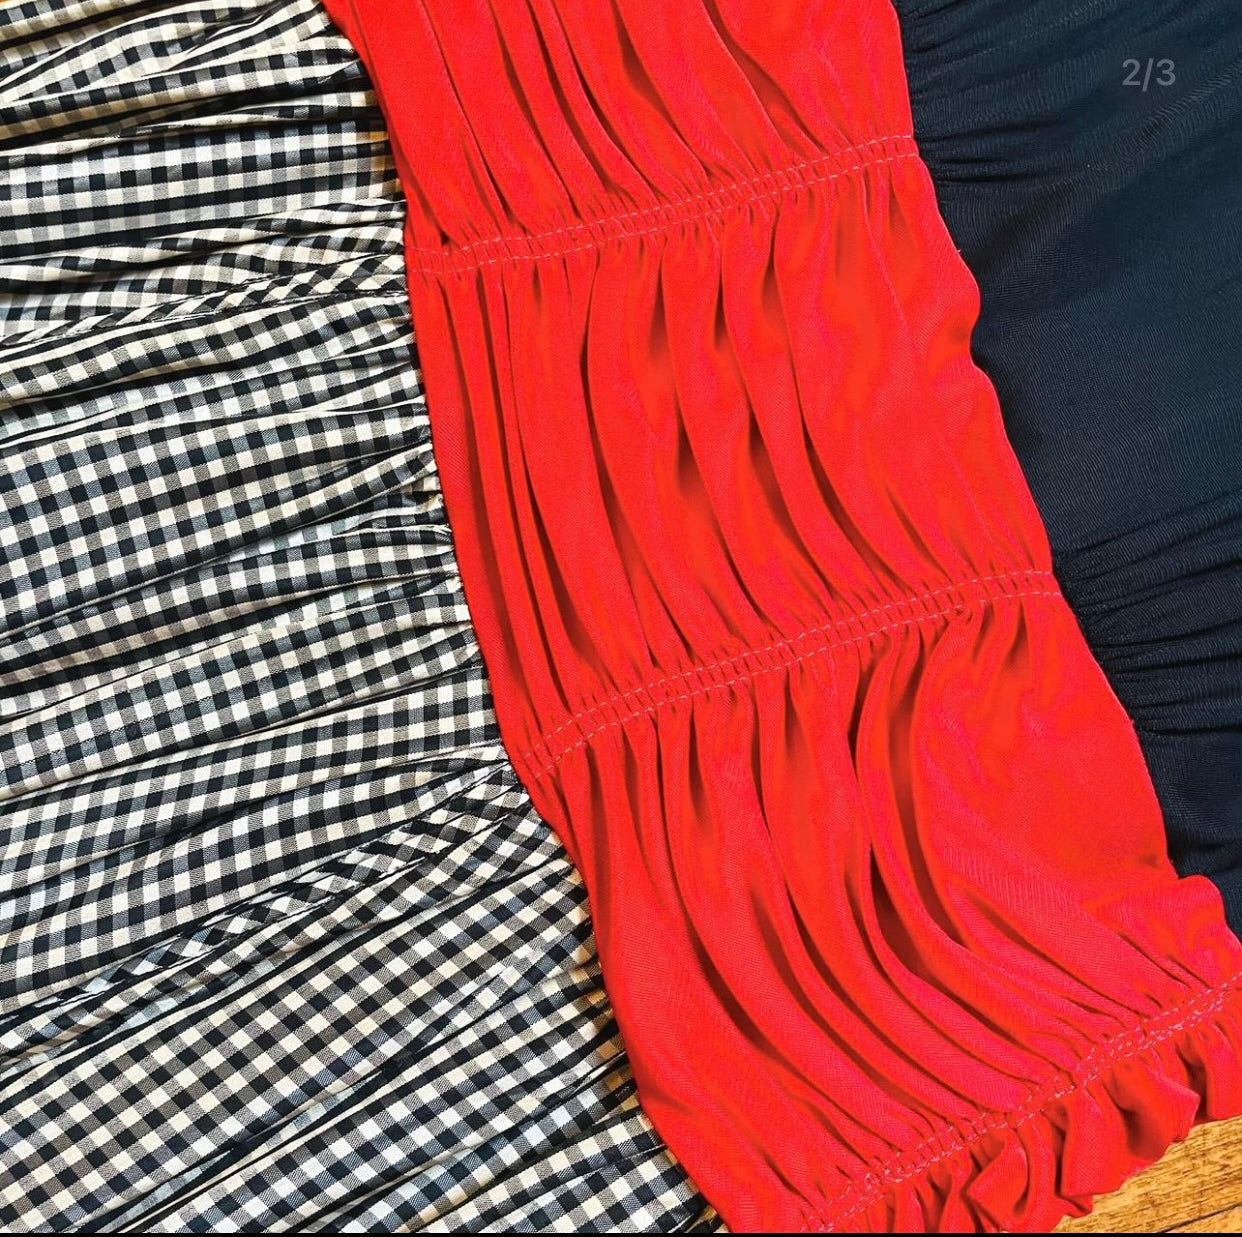 1950s Black Gingham Pattern Dress with Satin Sash